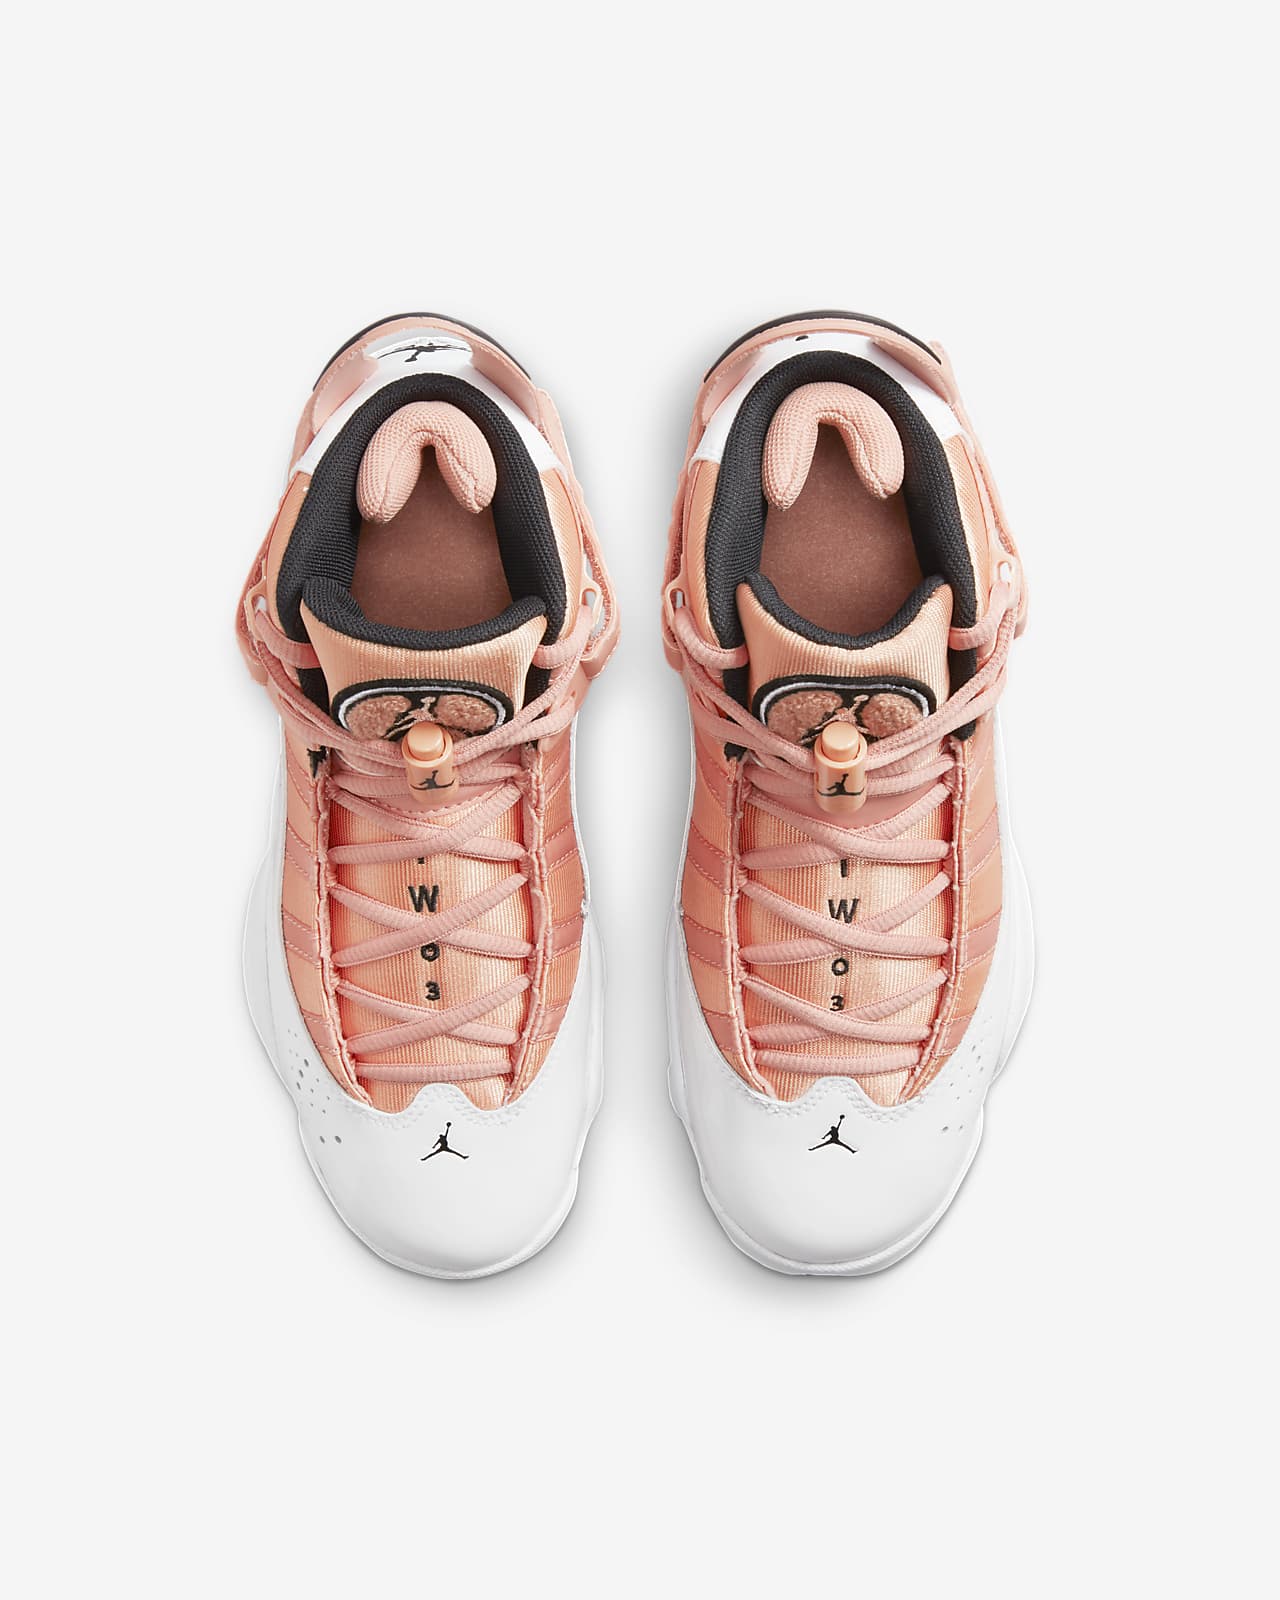 Jordan 6 Rings Older Kids' Shoes. Nike RO